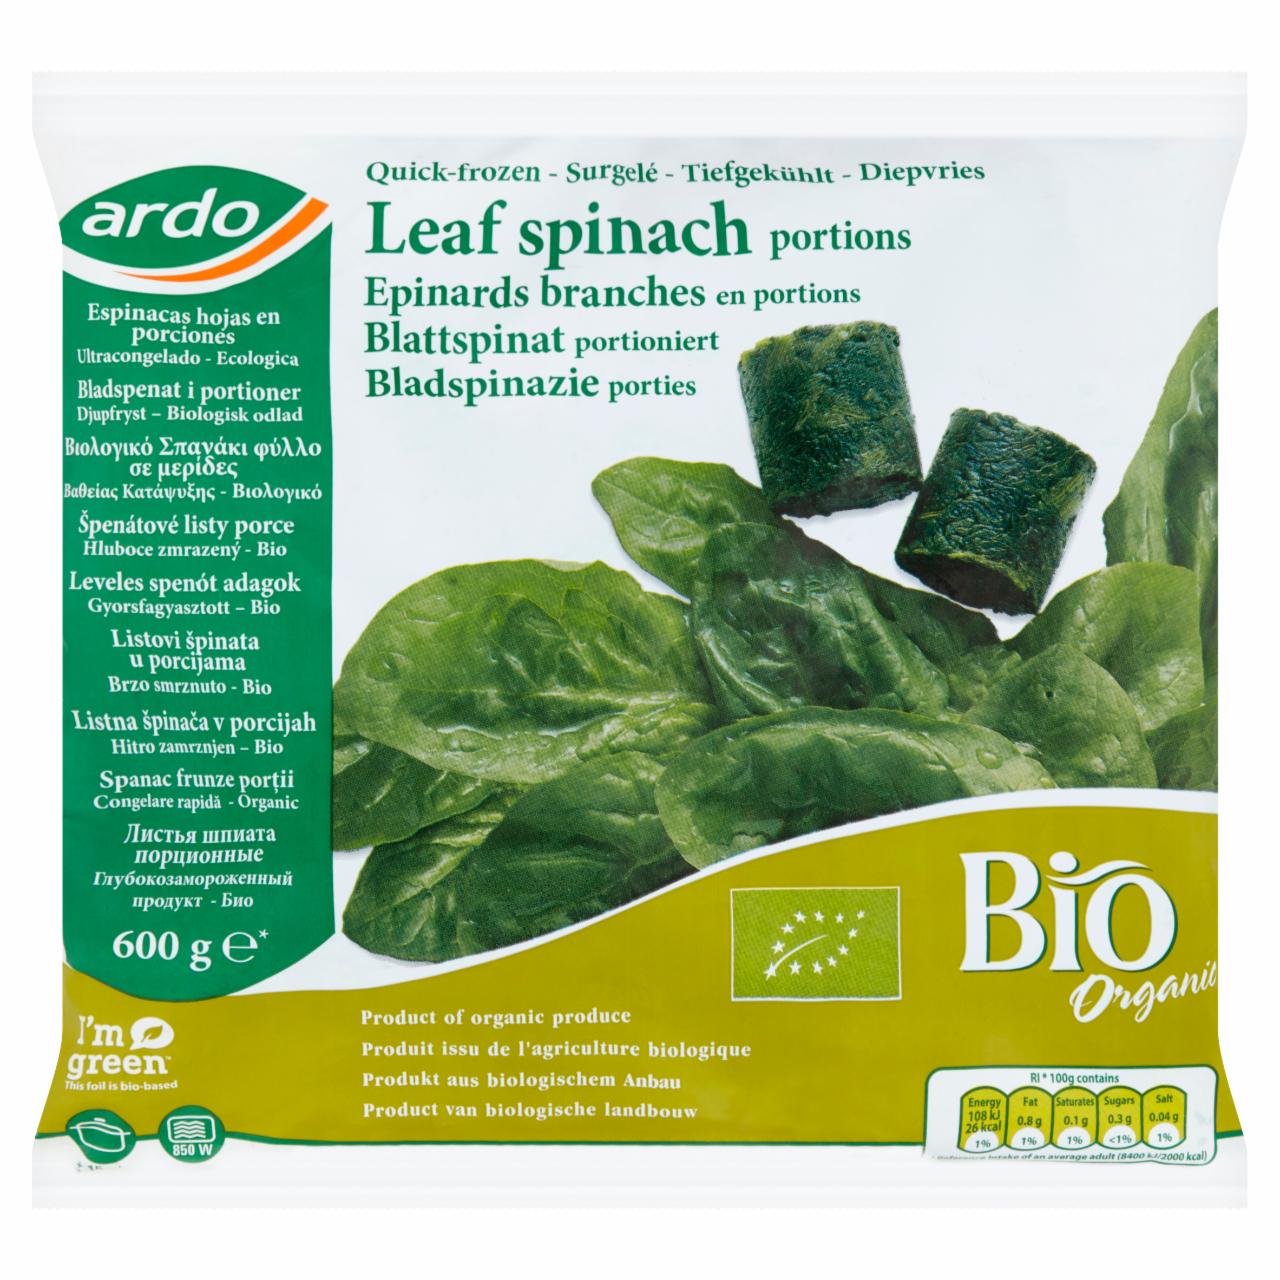 Képek - Leaf spinach portions (gyorsfagyasztott BIO leveles spenót adagok) Ardo